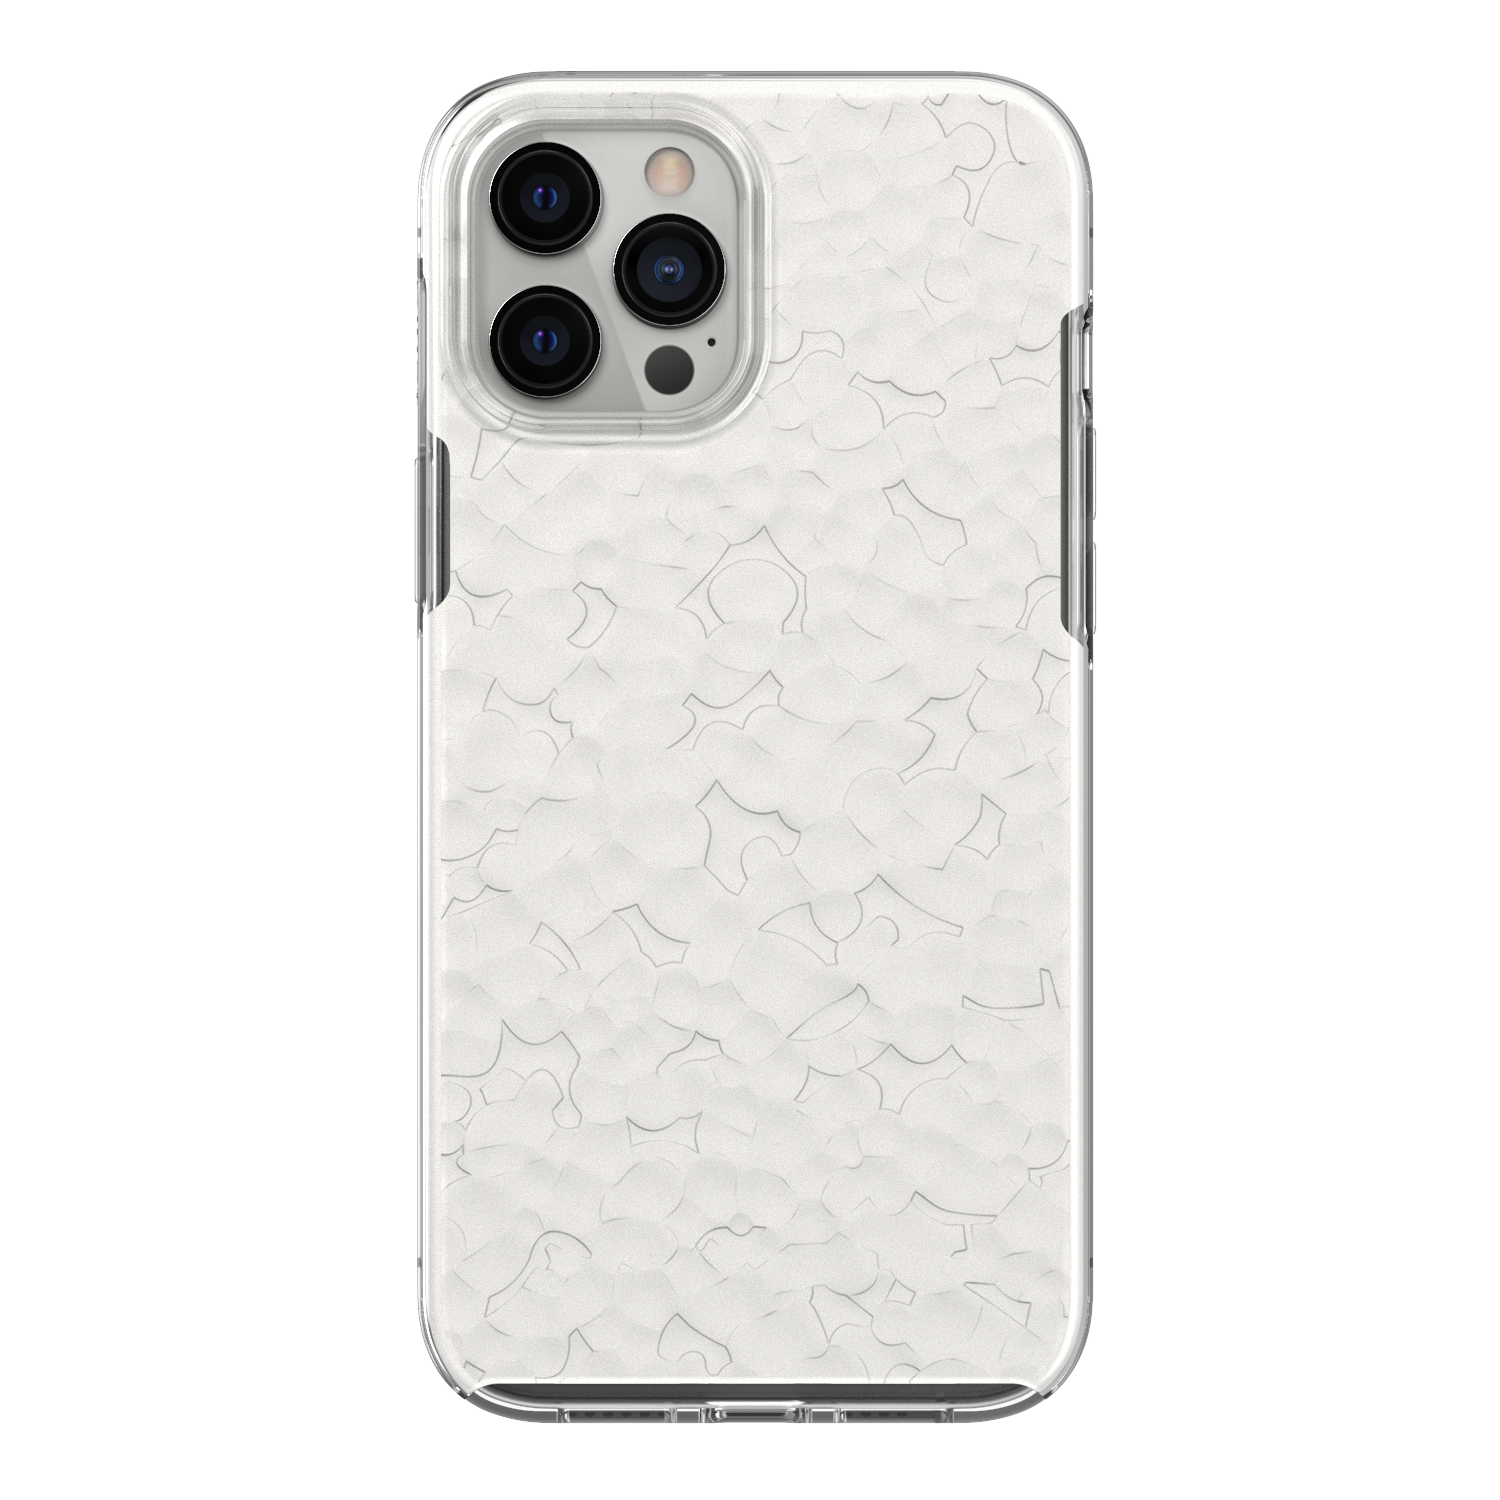 Sentri Vintage White for iPhone 12 Pro Max